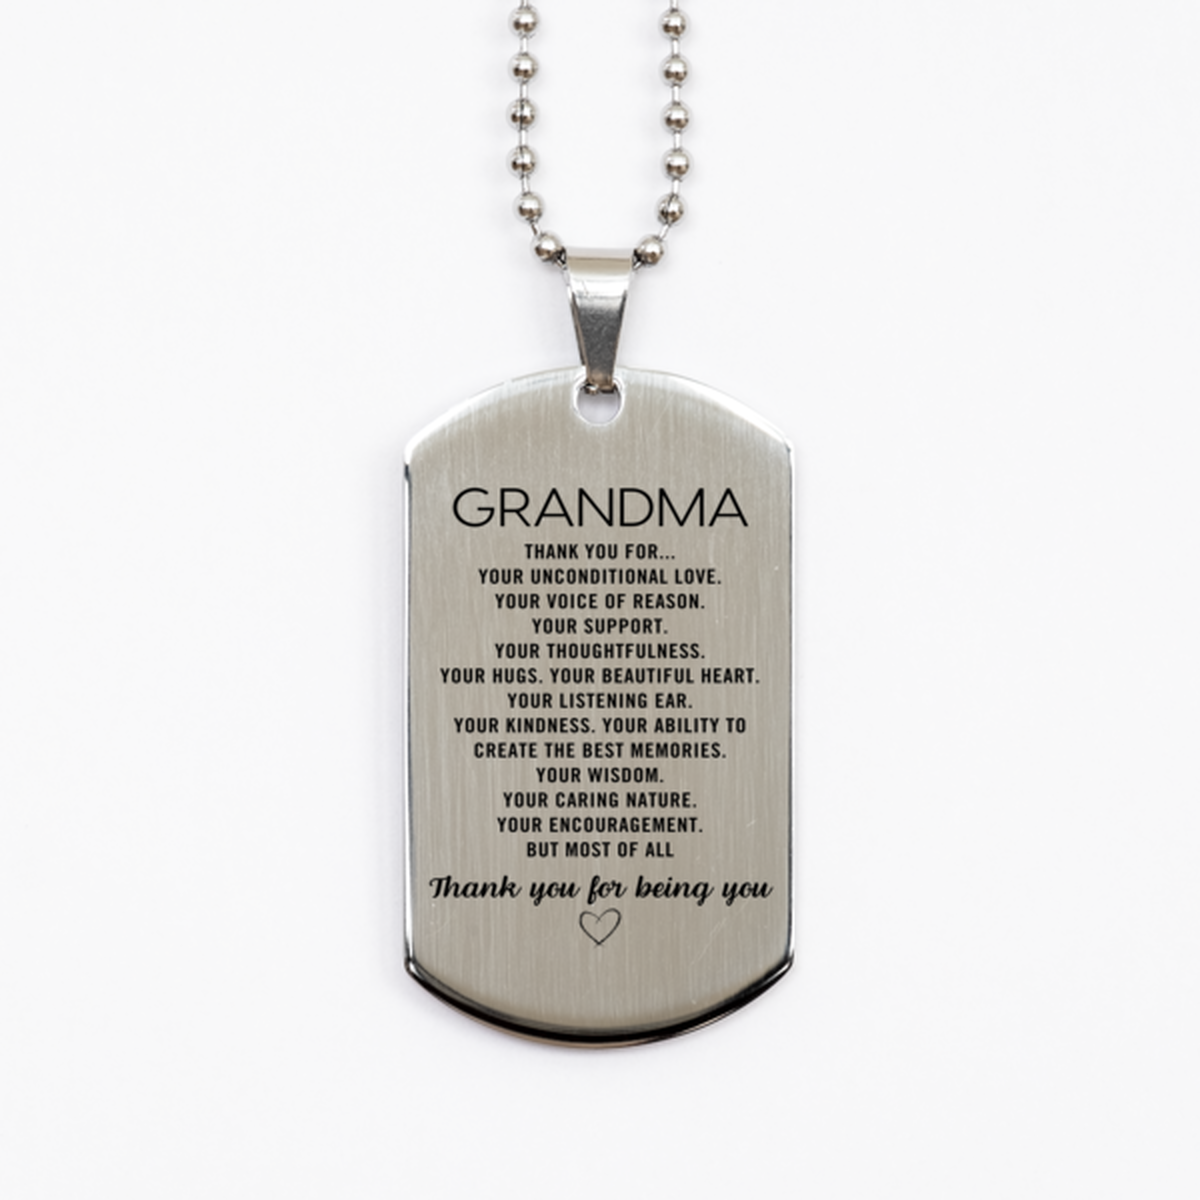 Grandma Silver Dog Tag Custom, Engraved Gifts For Grandma Christmas Graduation Birthday Gifts for Men Women Grandma Thank you for Your unconditional love